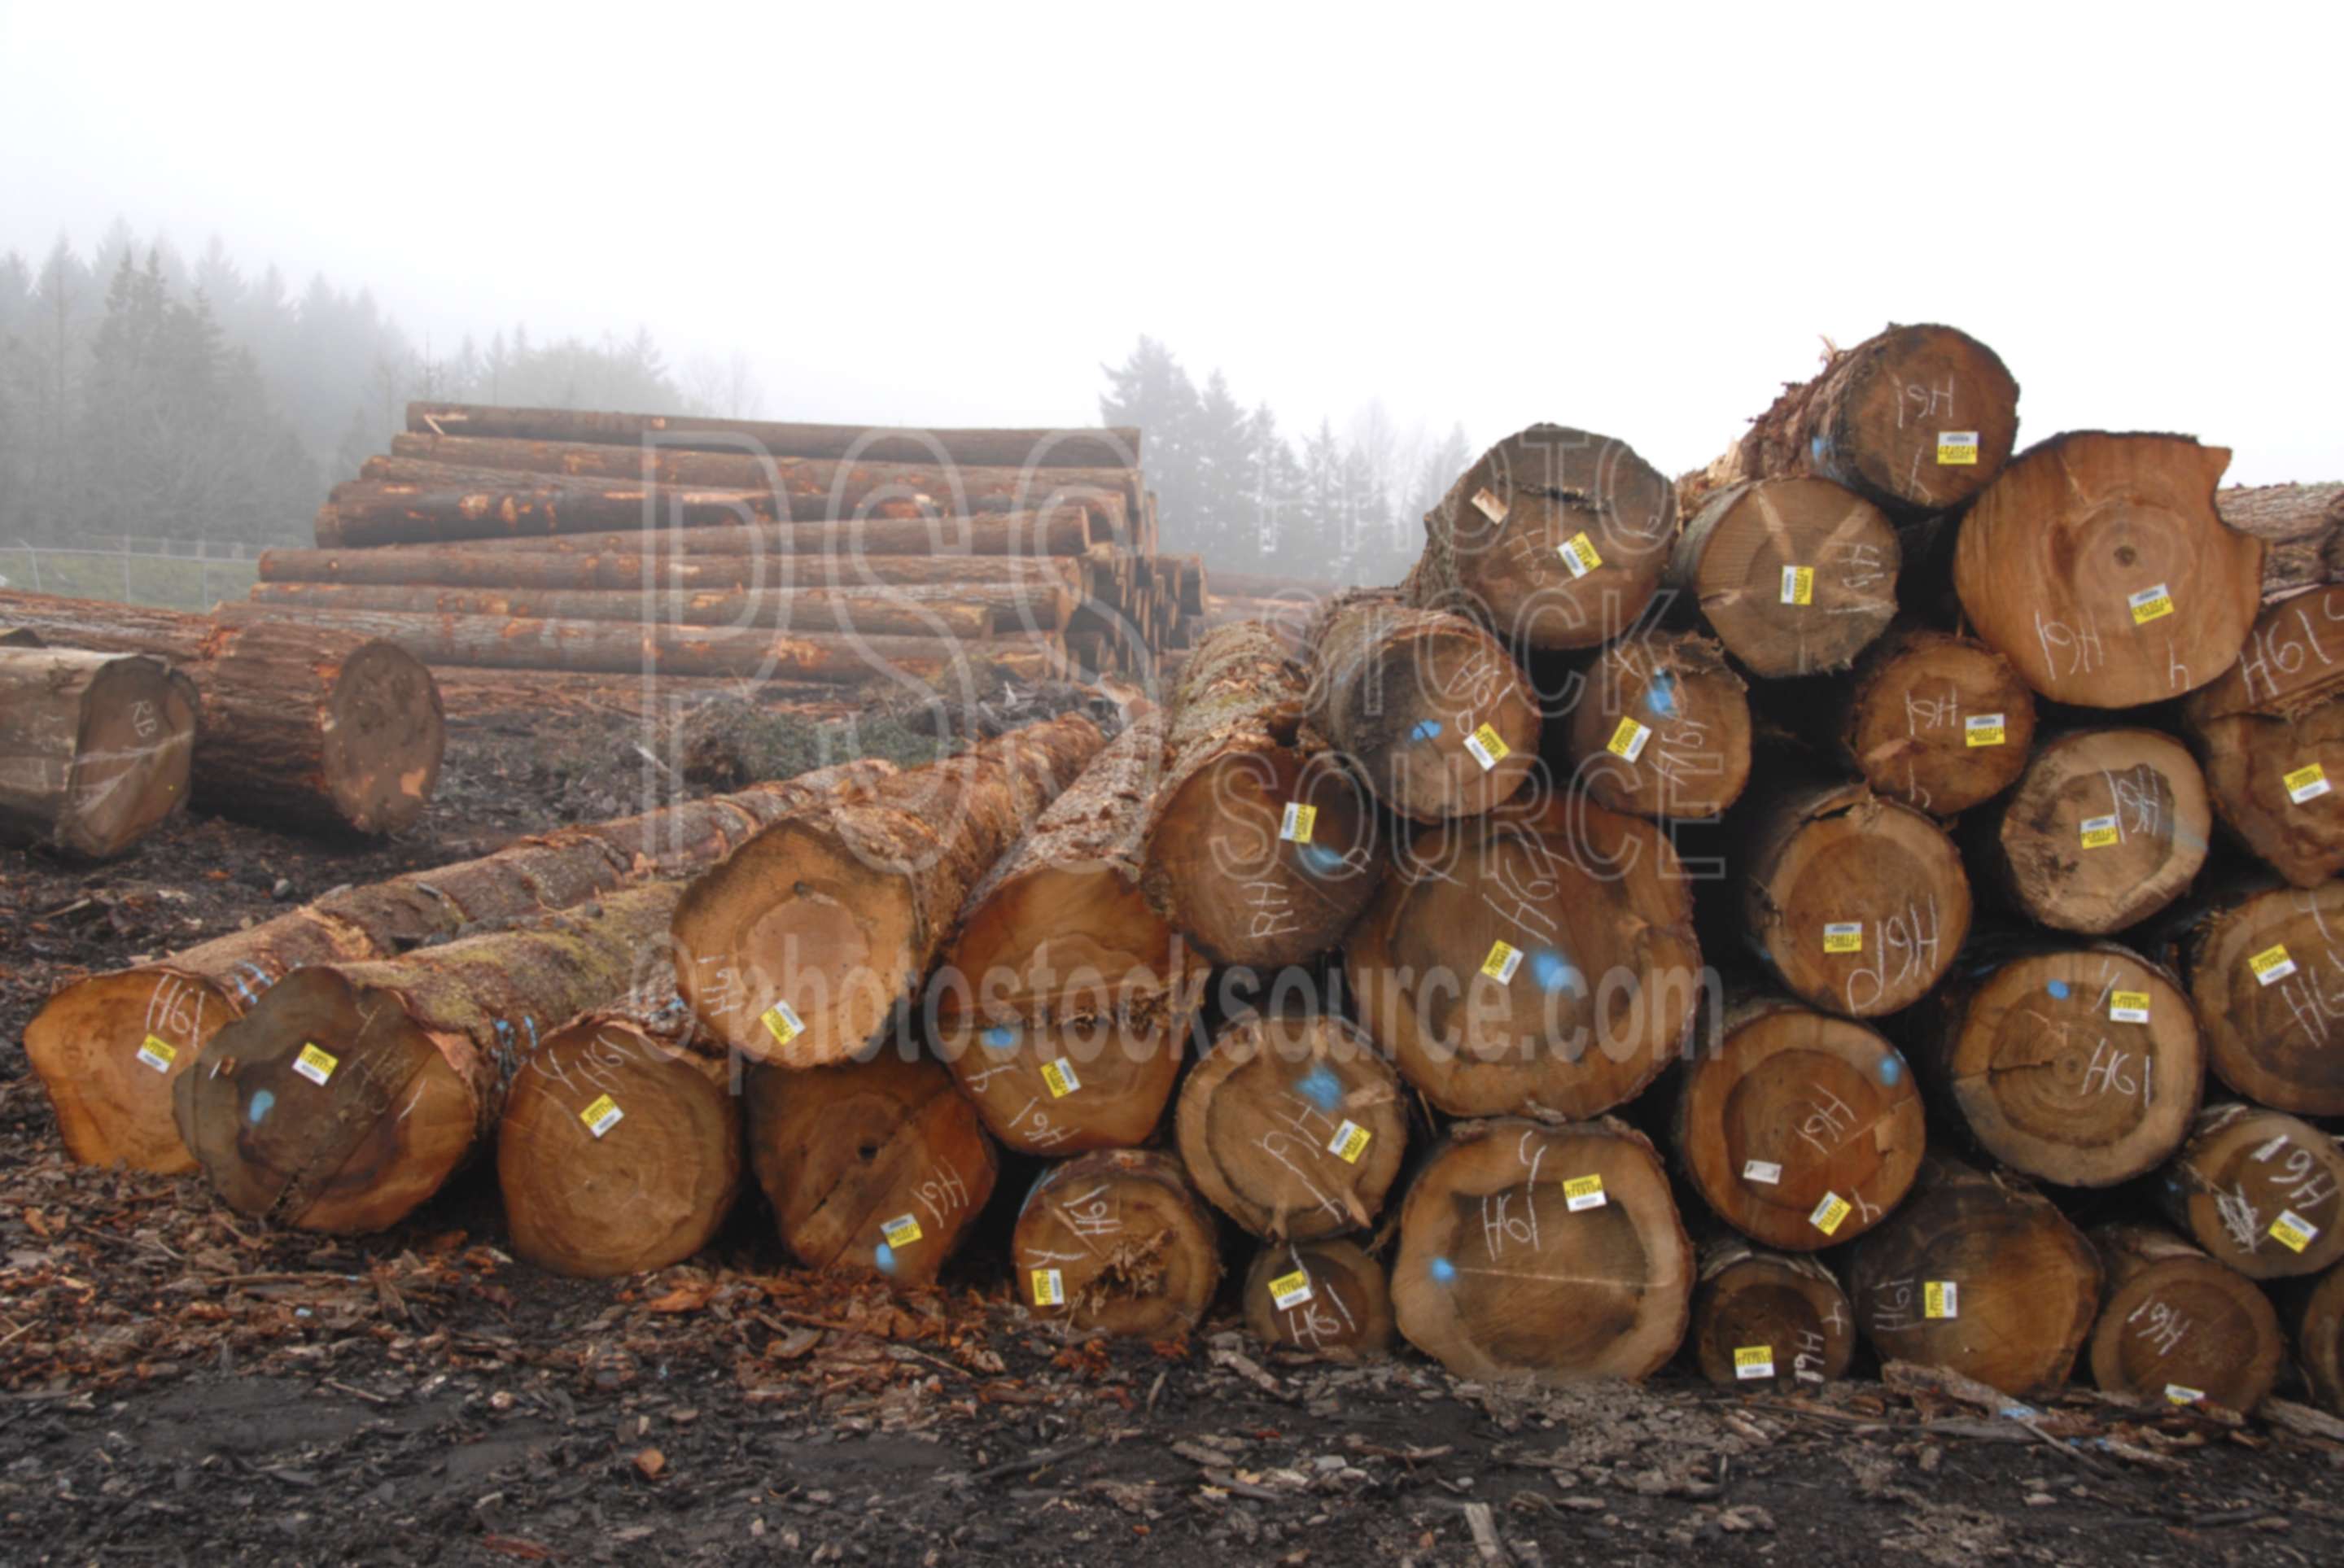 Logs in Fog,log,logs,logging,pile,cut,cutting,harvest,harvested,fog